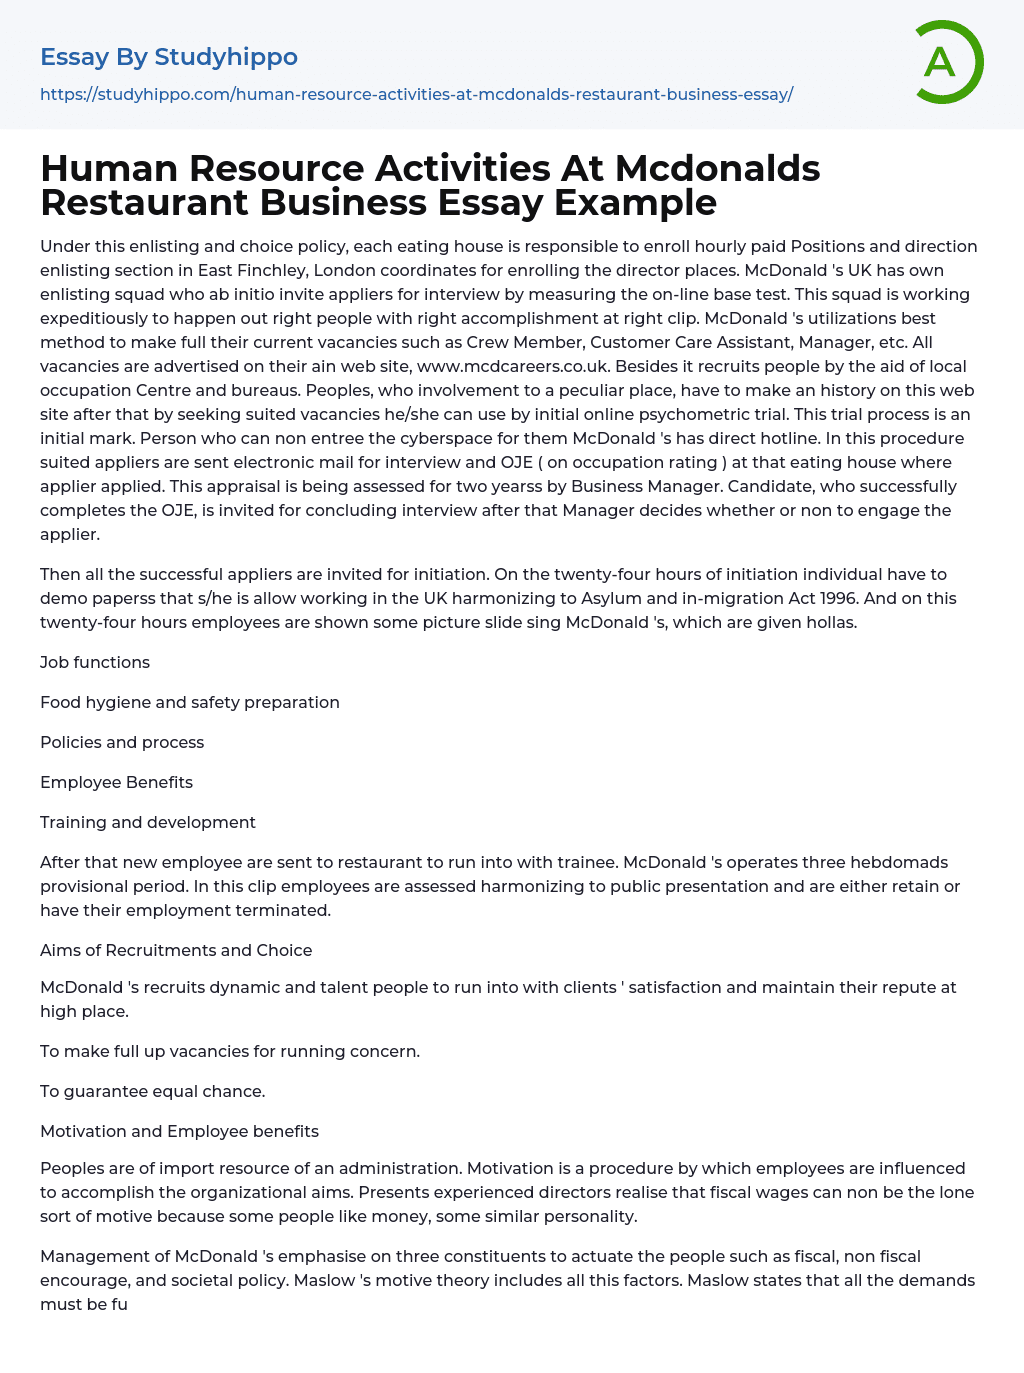 Human Resource Activities At Mcdonalds Restaurant Business Essay Example